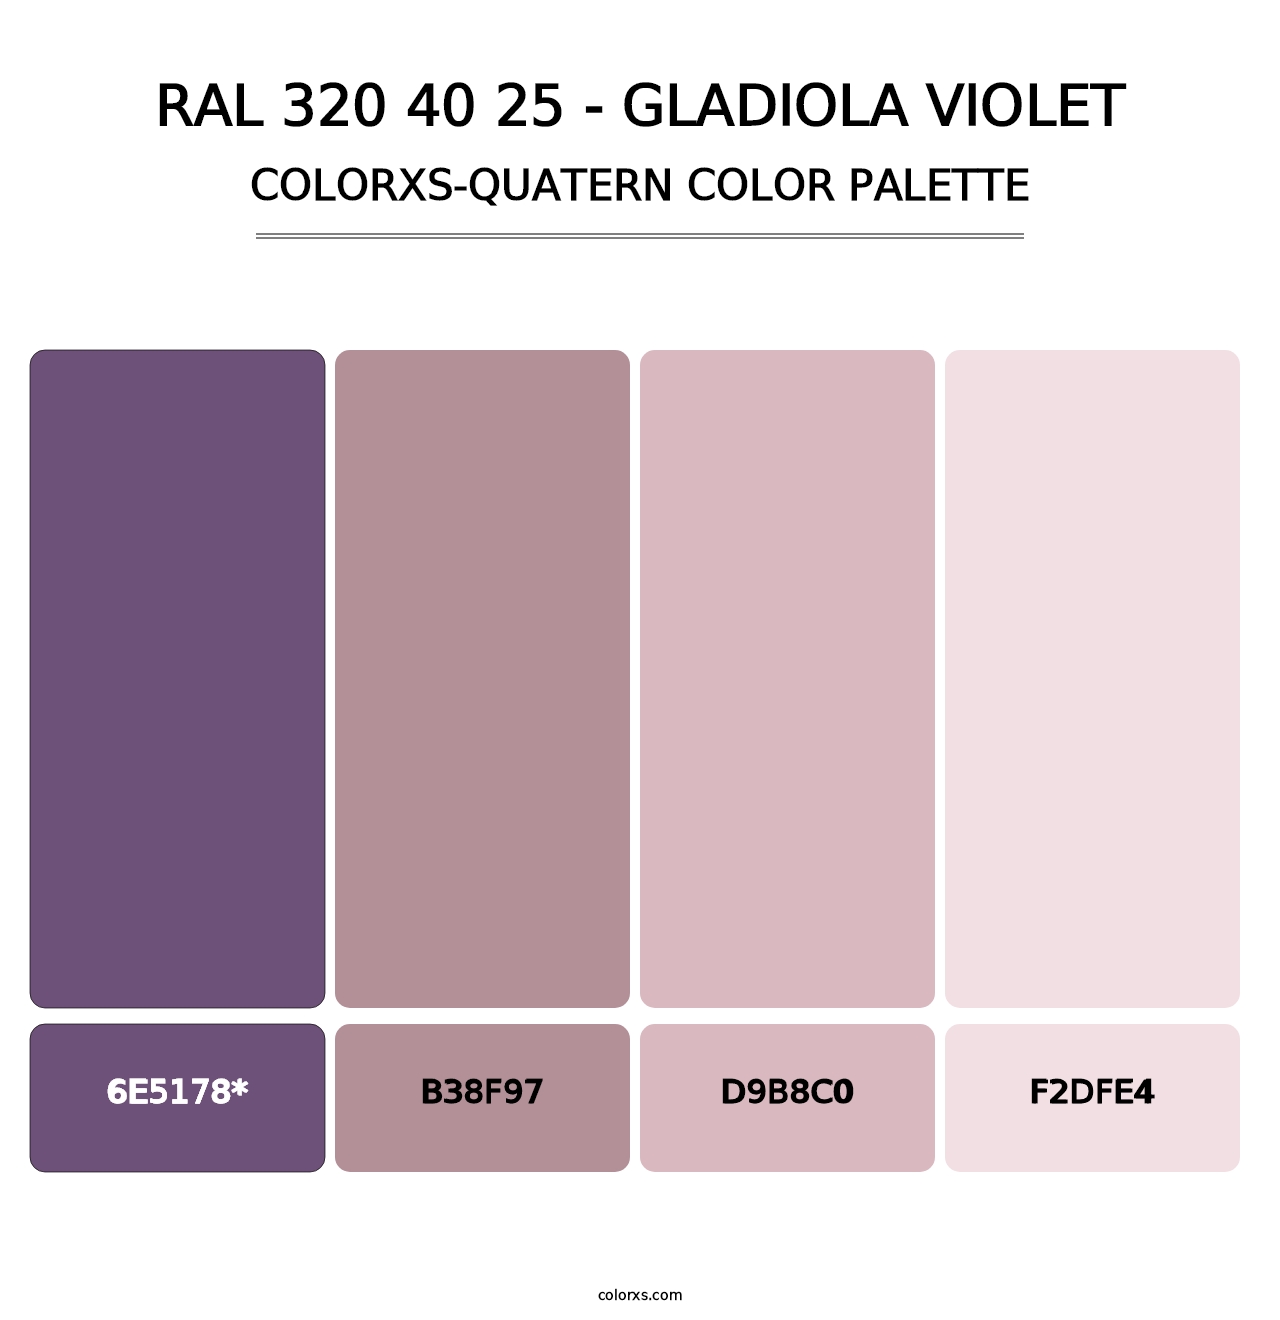 RAL 320 40 25 - Gladiola Violet - Colorxs Quatern Palette